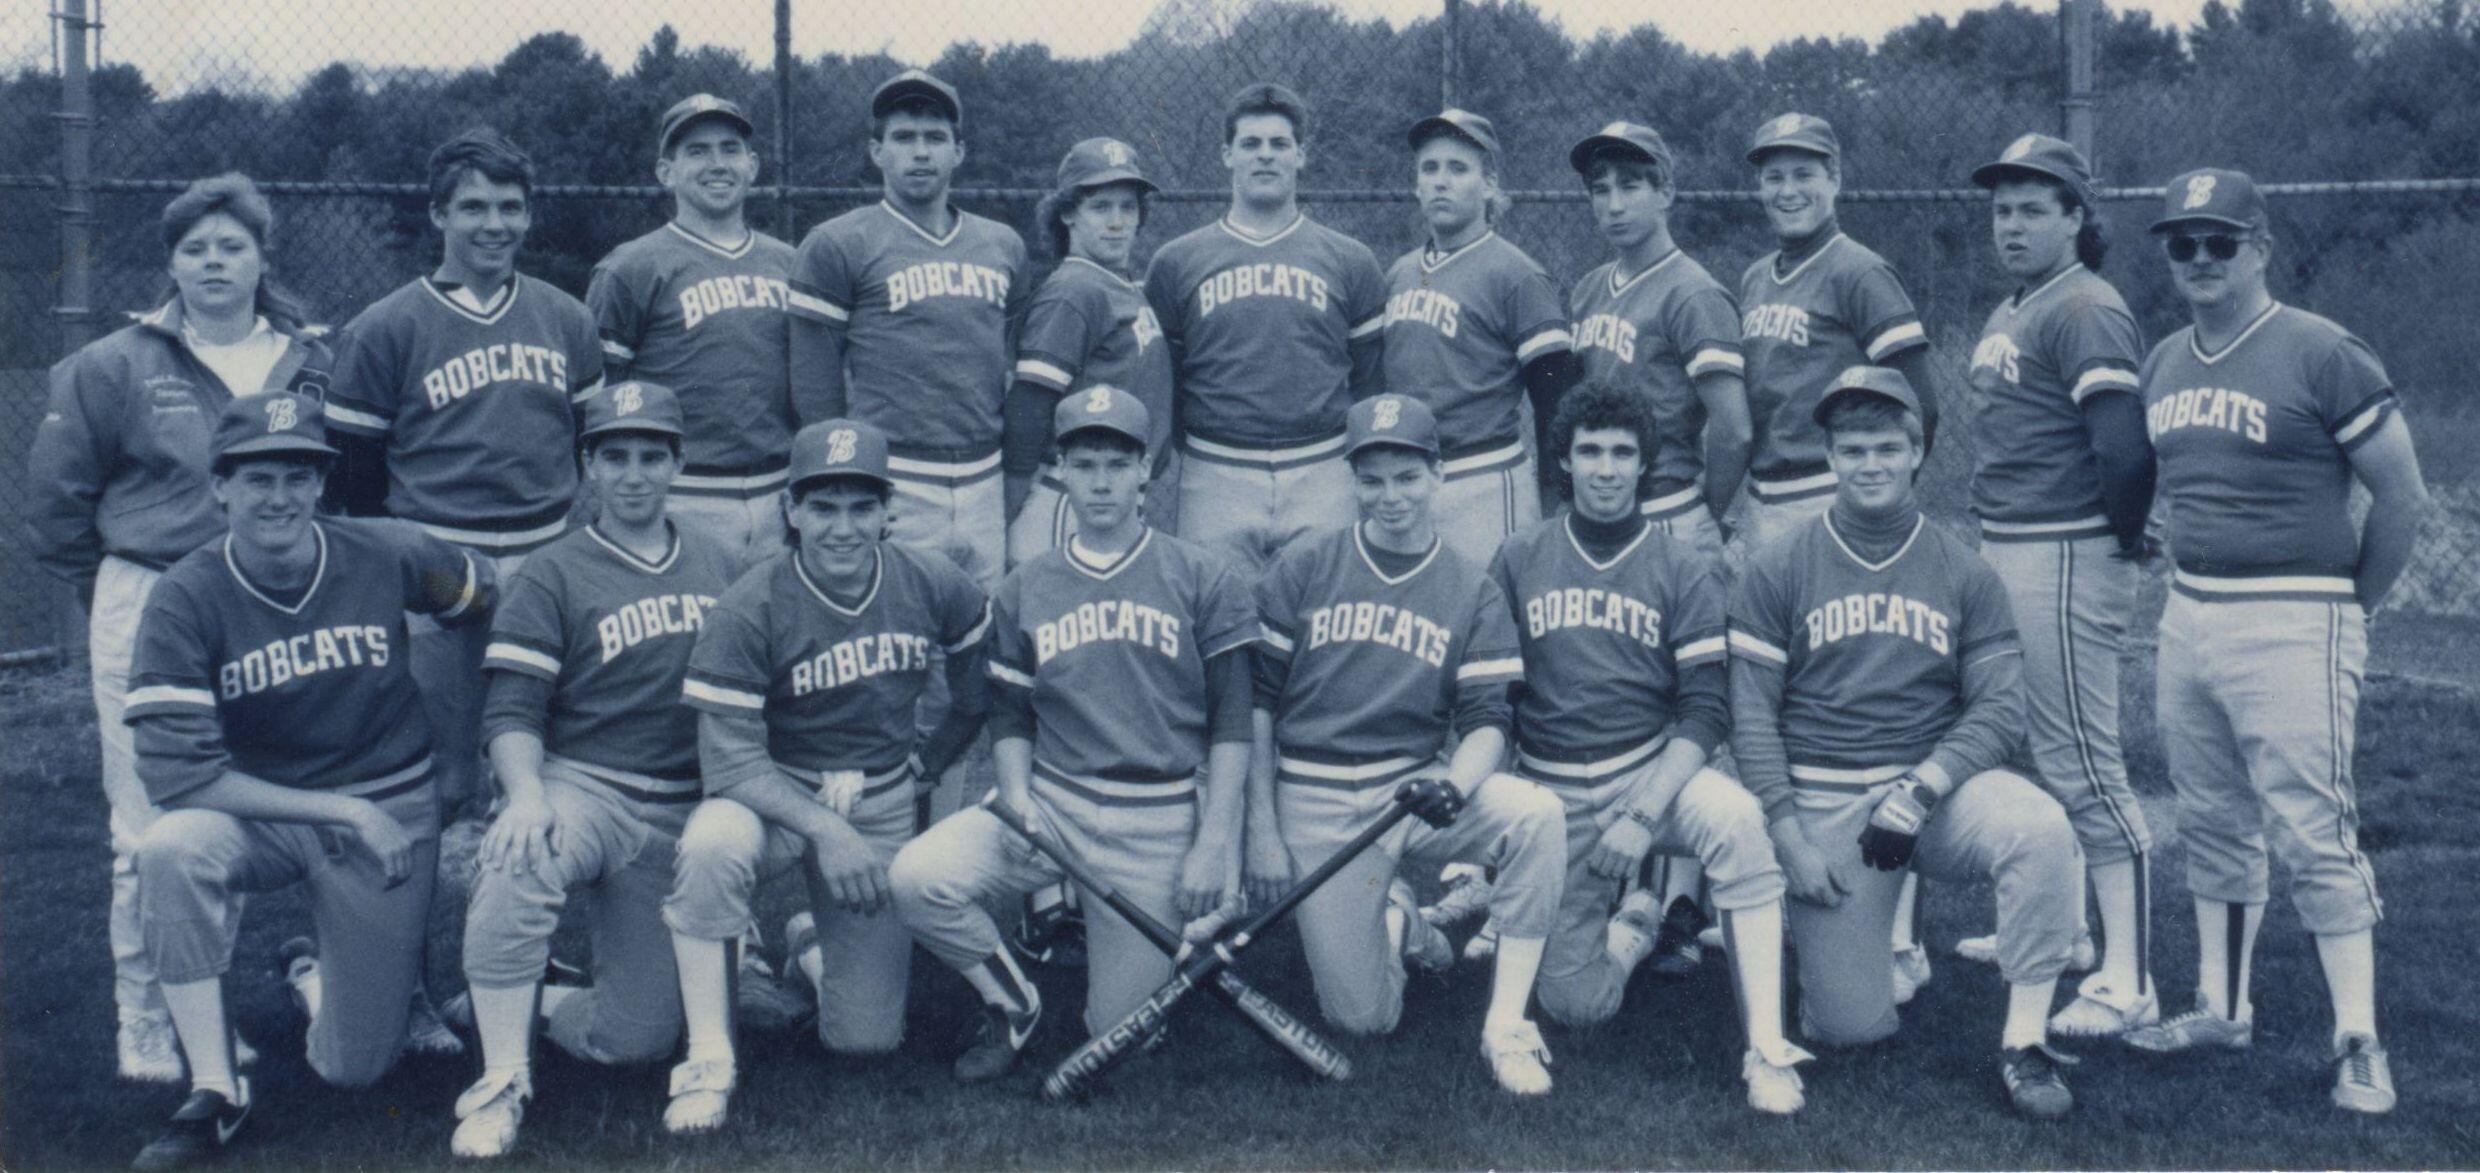 1989 championship team